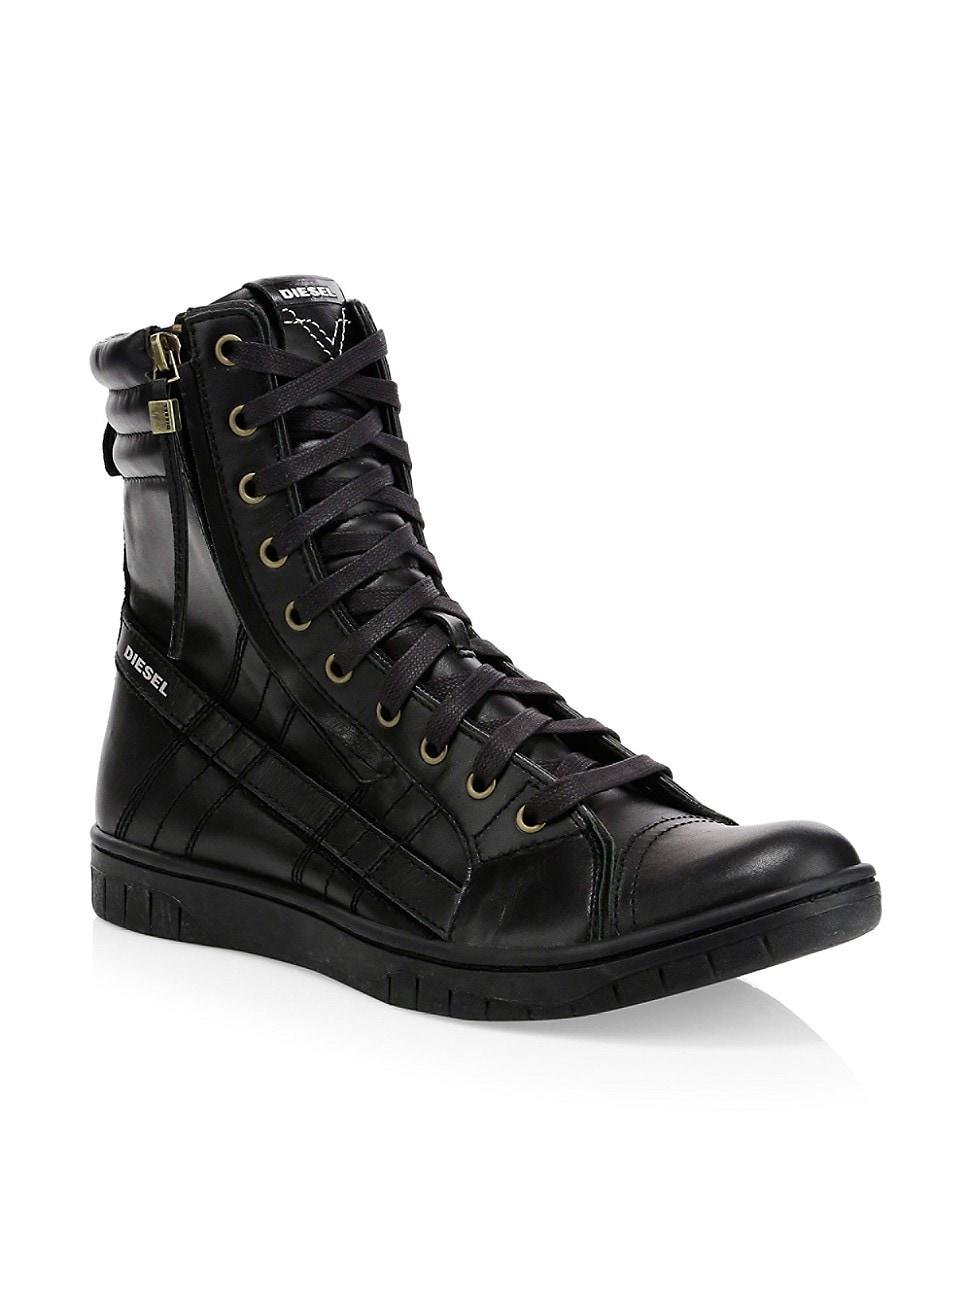 DIESEL Hybrid Leather Sneaker Boots in Black for Men | Lyst